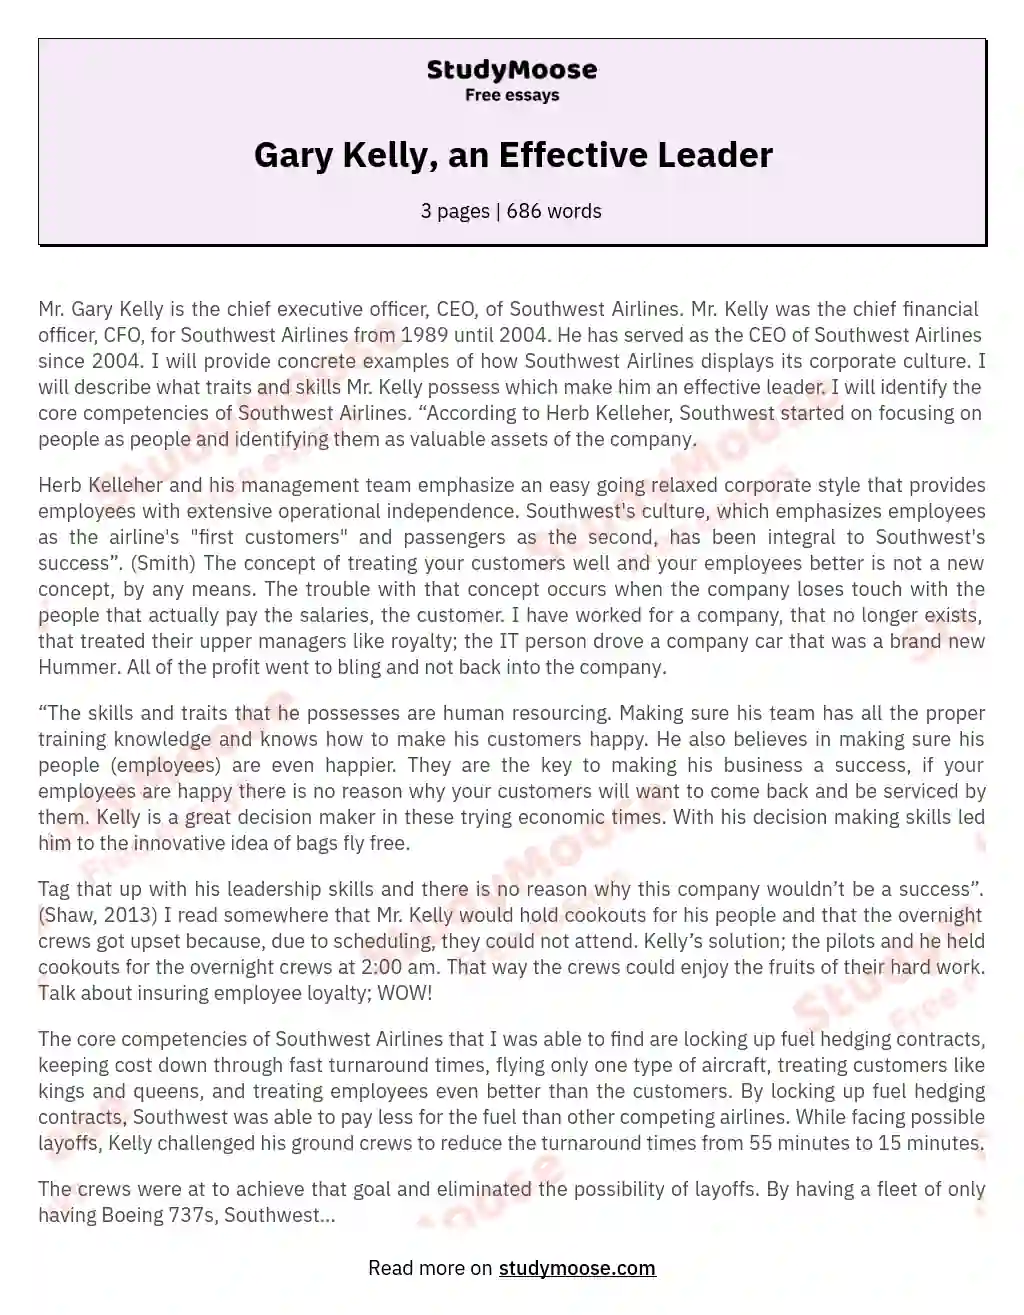 Gary Kelly, an Effective Leader essay